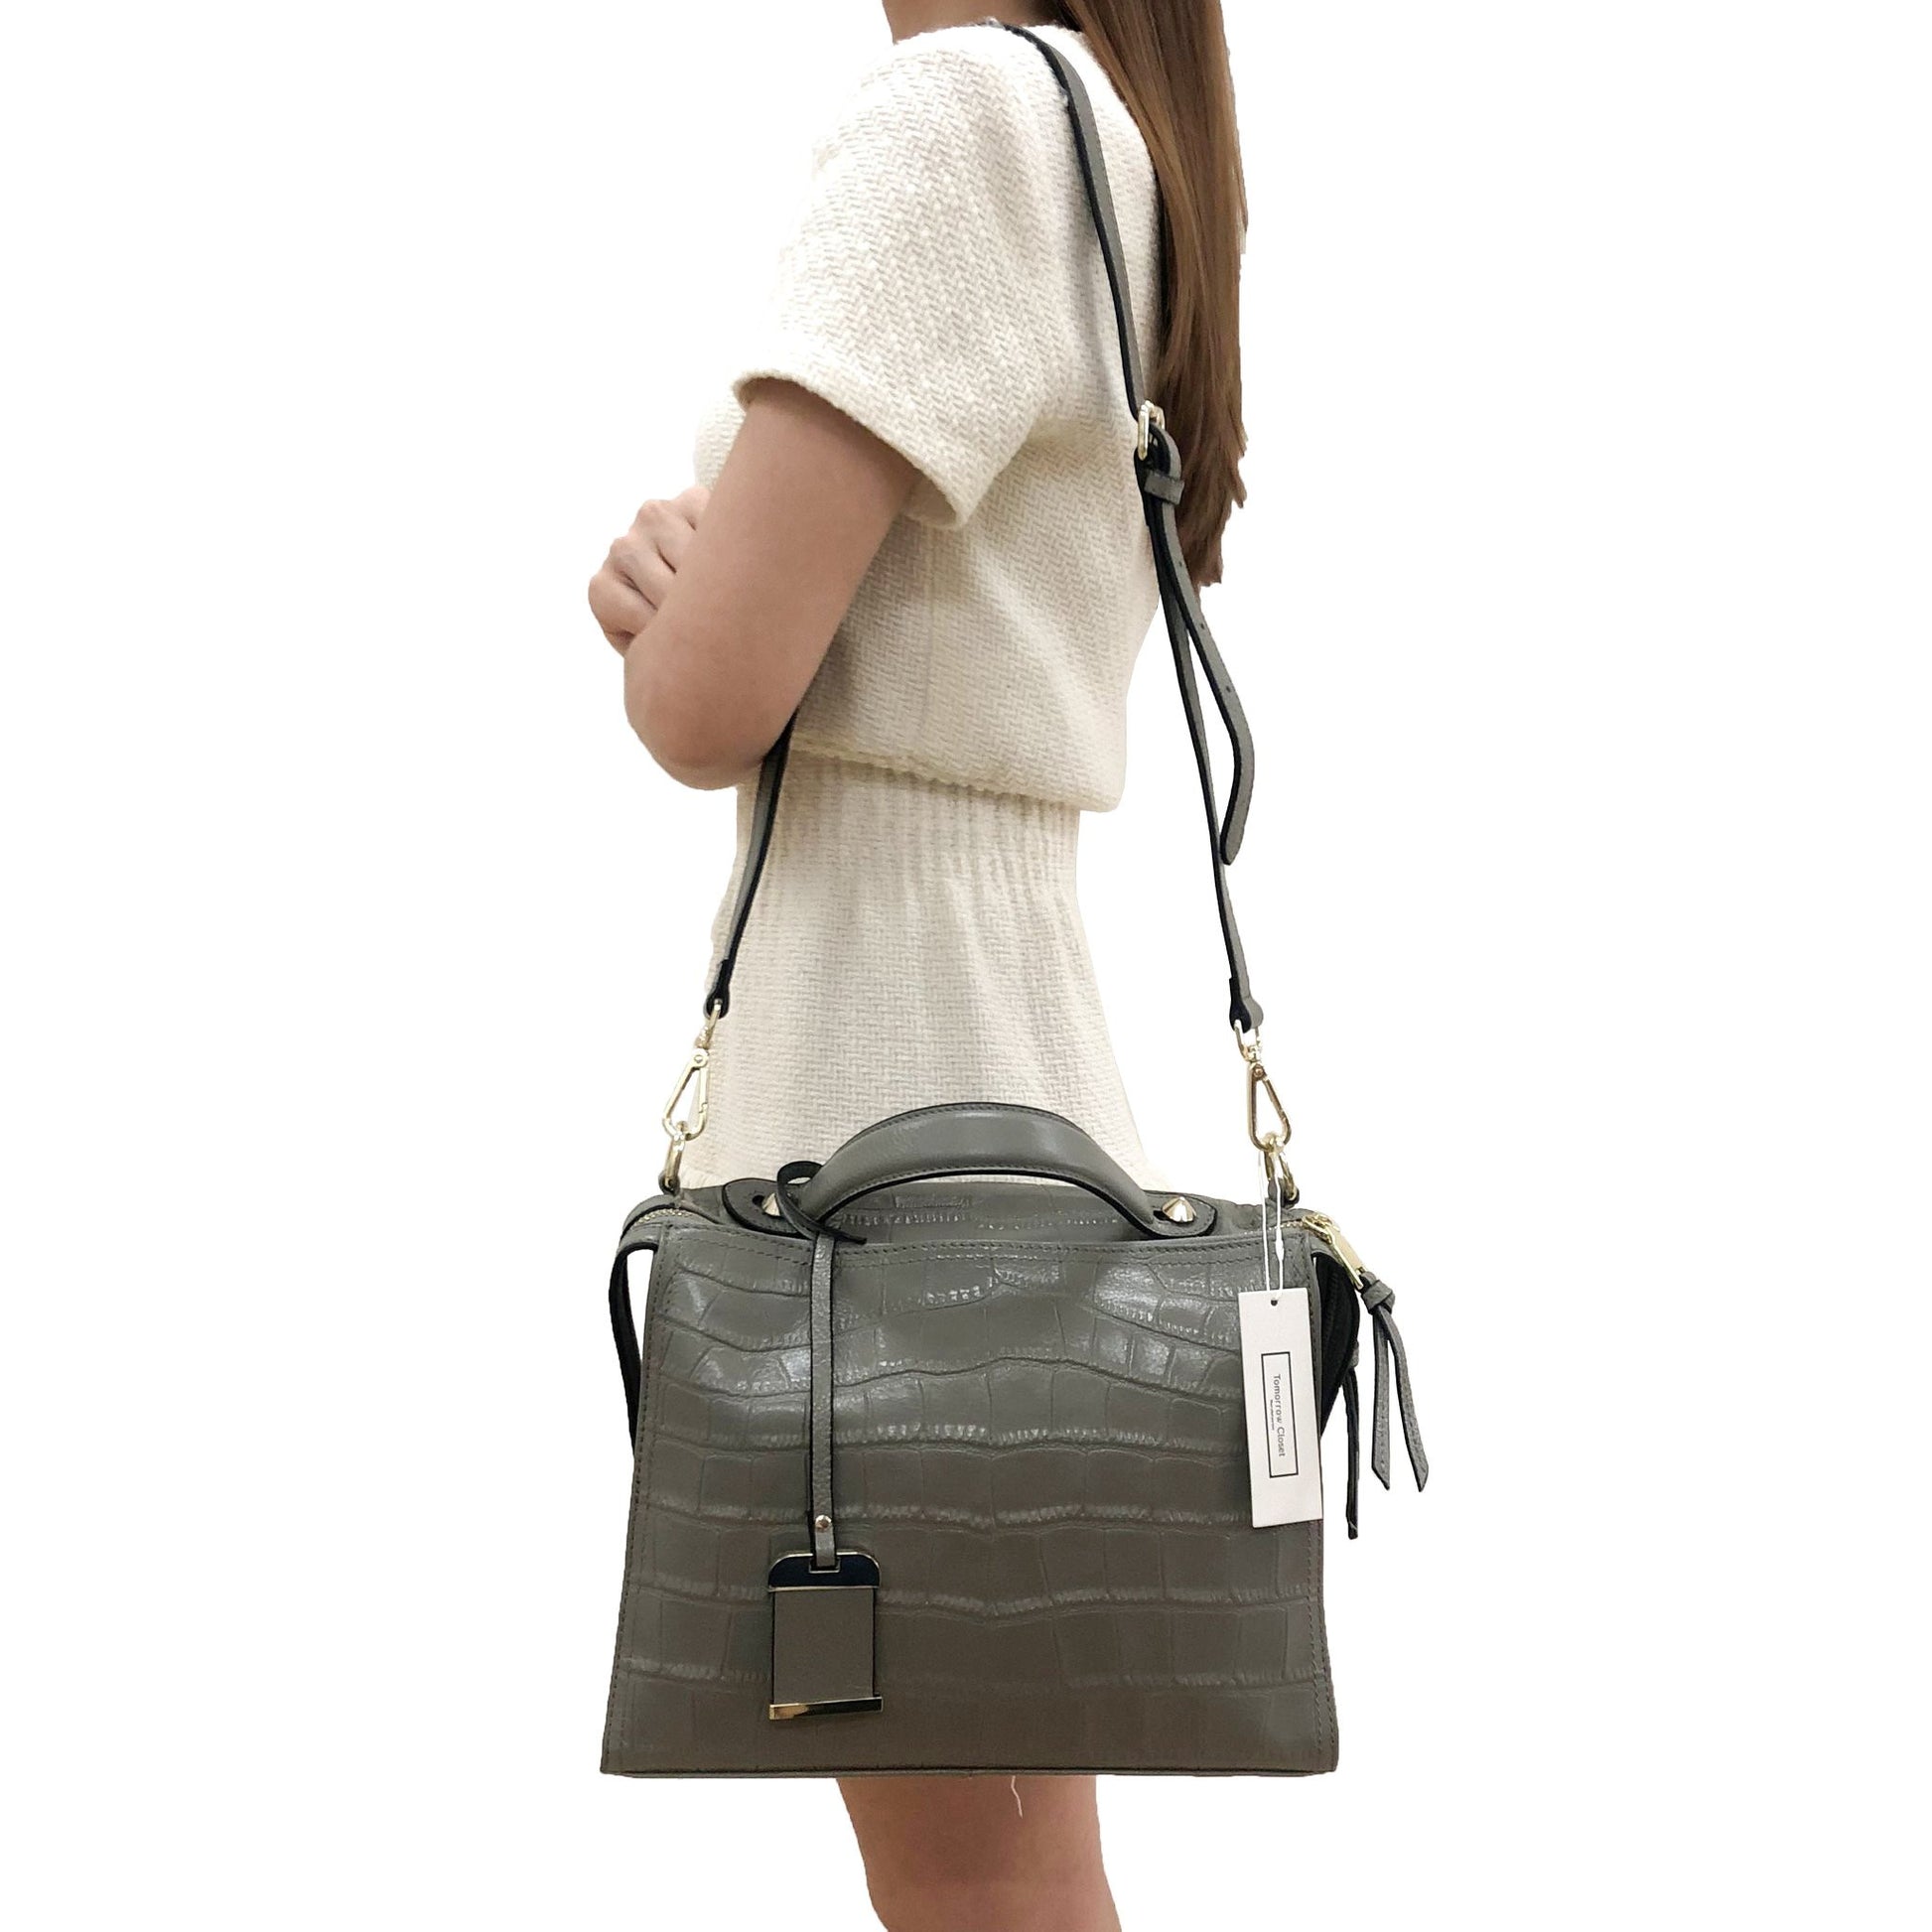 Women's genuine cowhide leather handbag sophia design by Tomorrow Closet